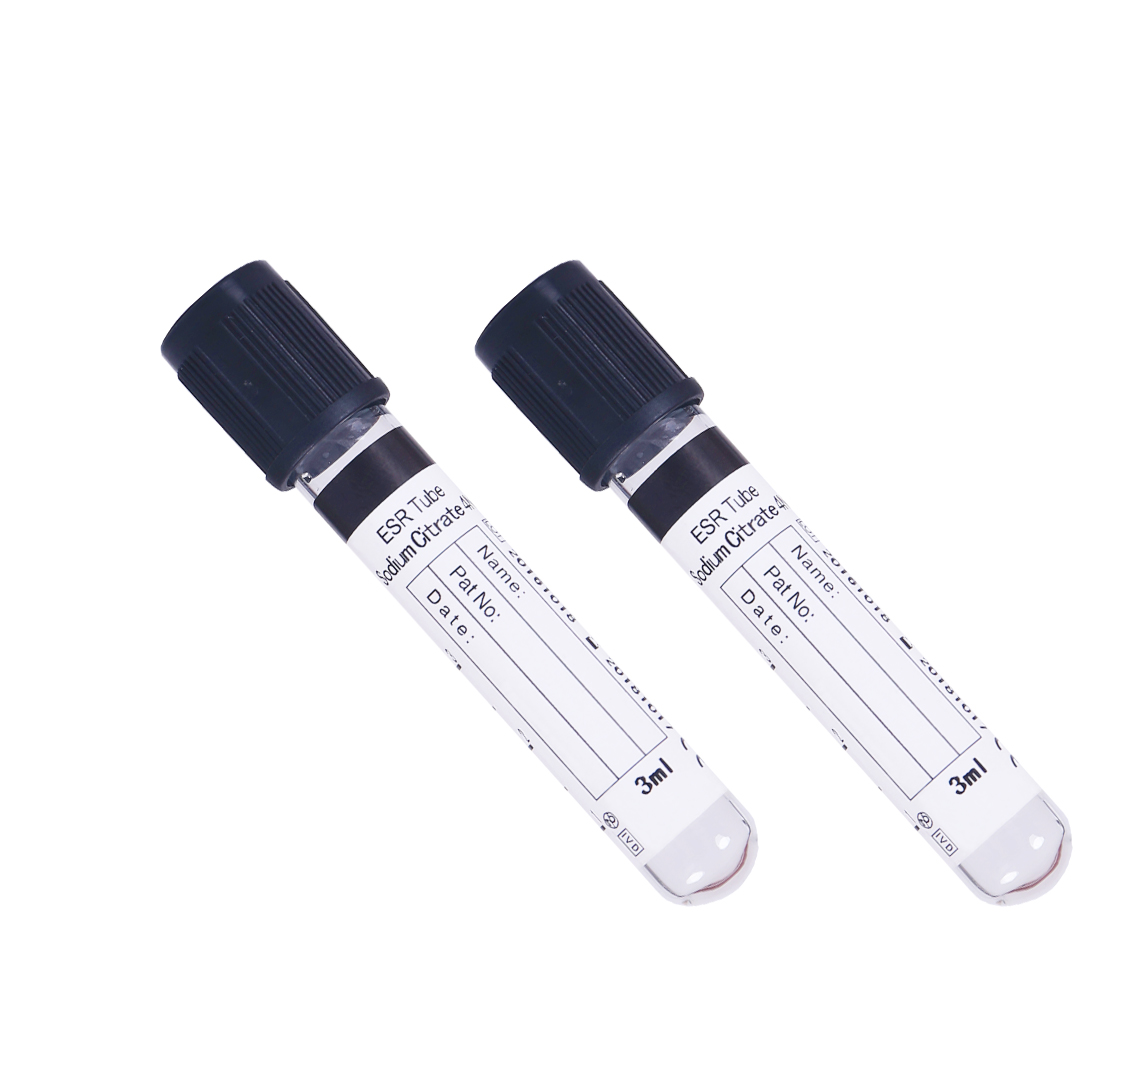 Sodium citrate 1:4 tubes (sterile)